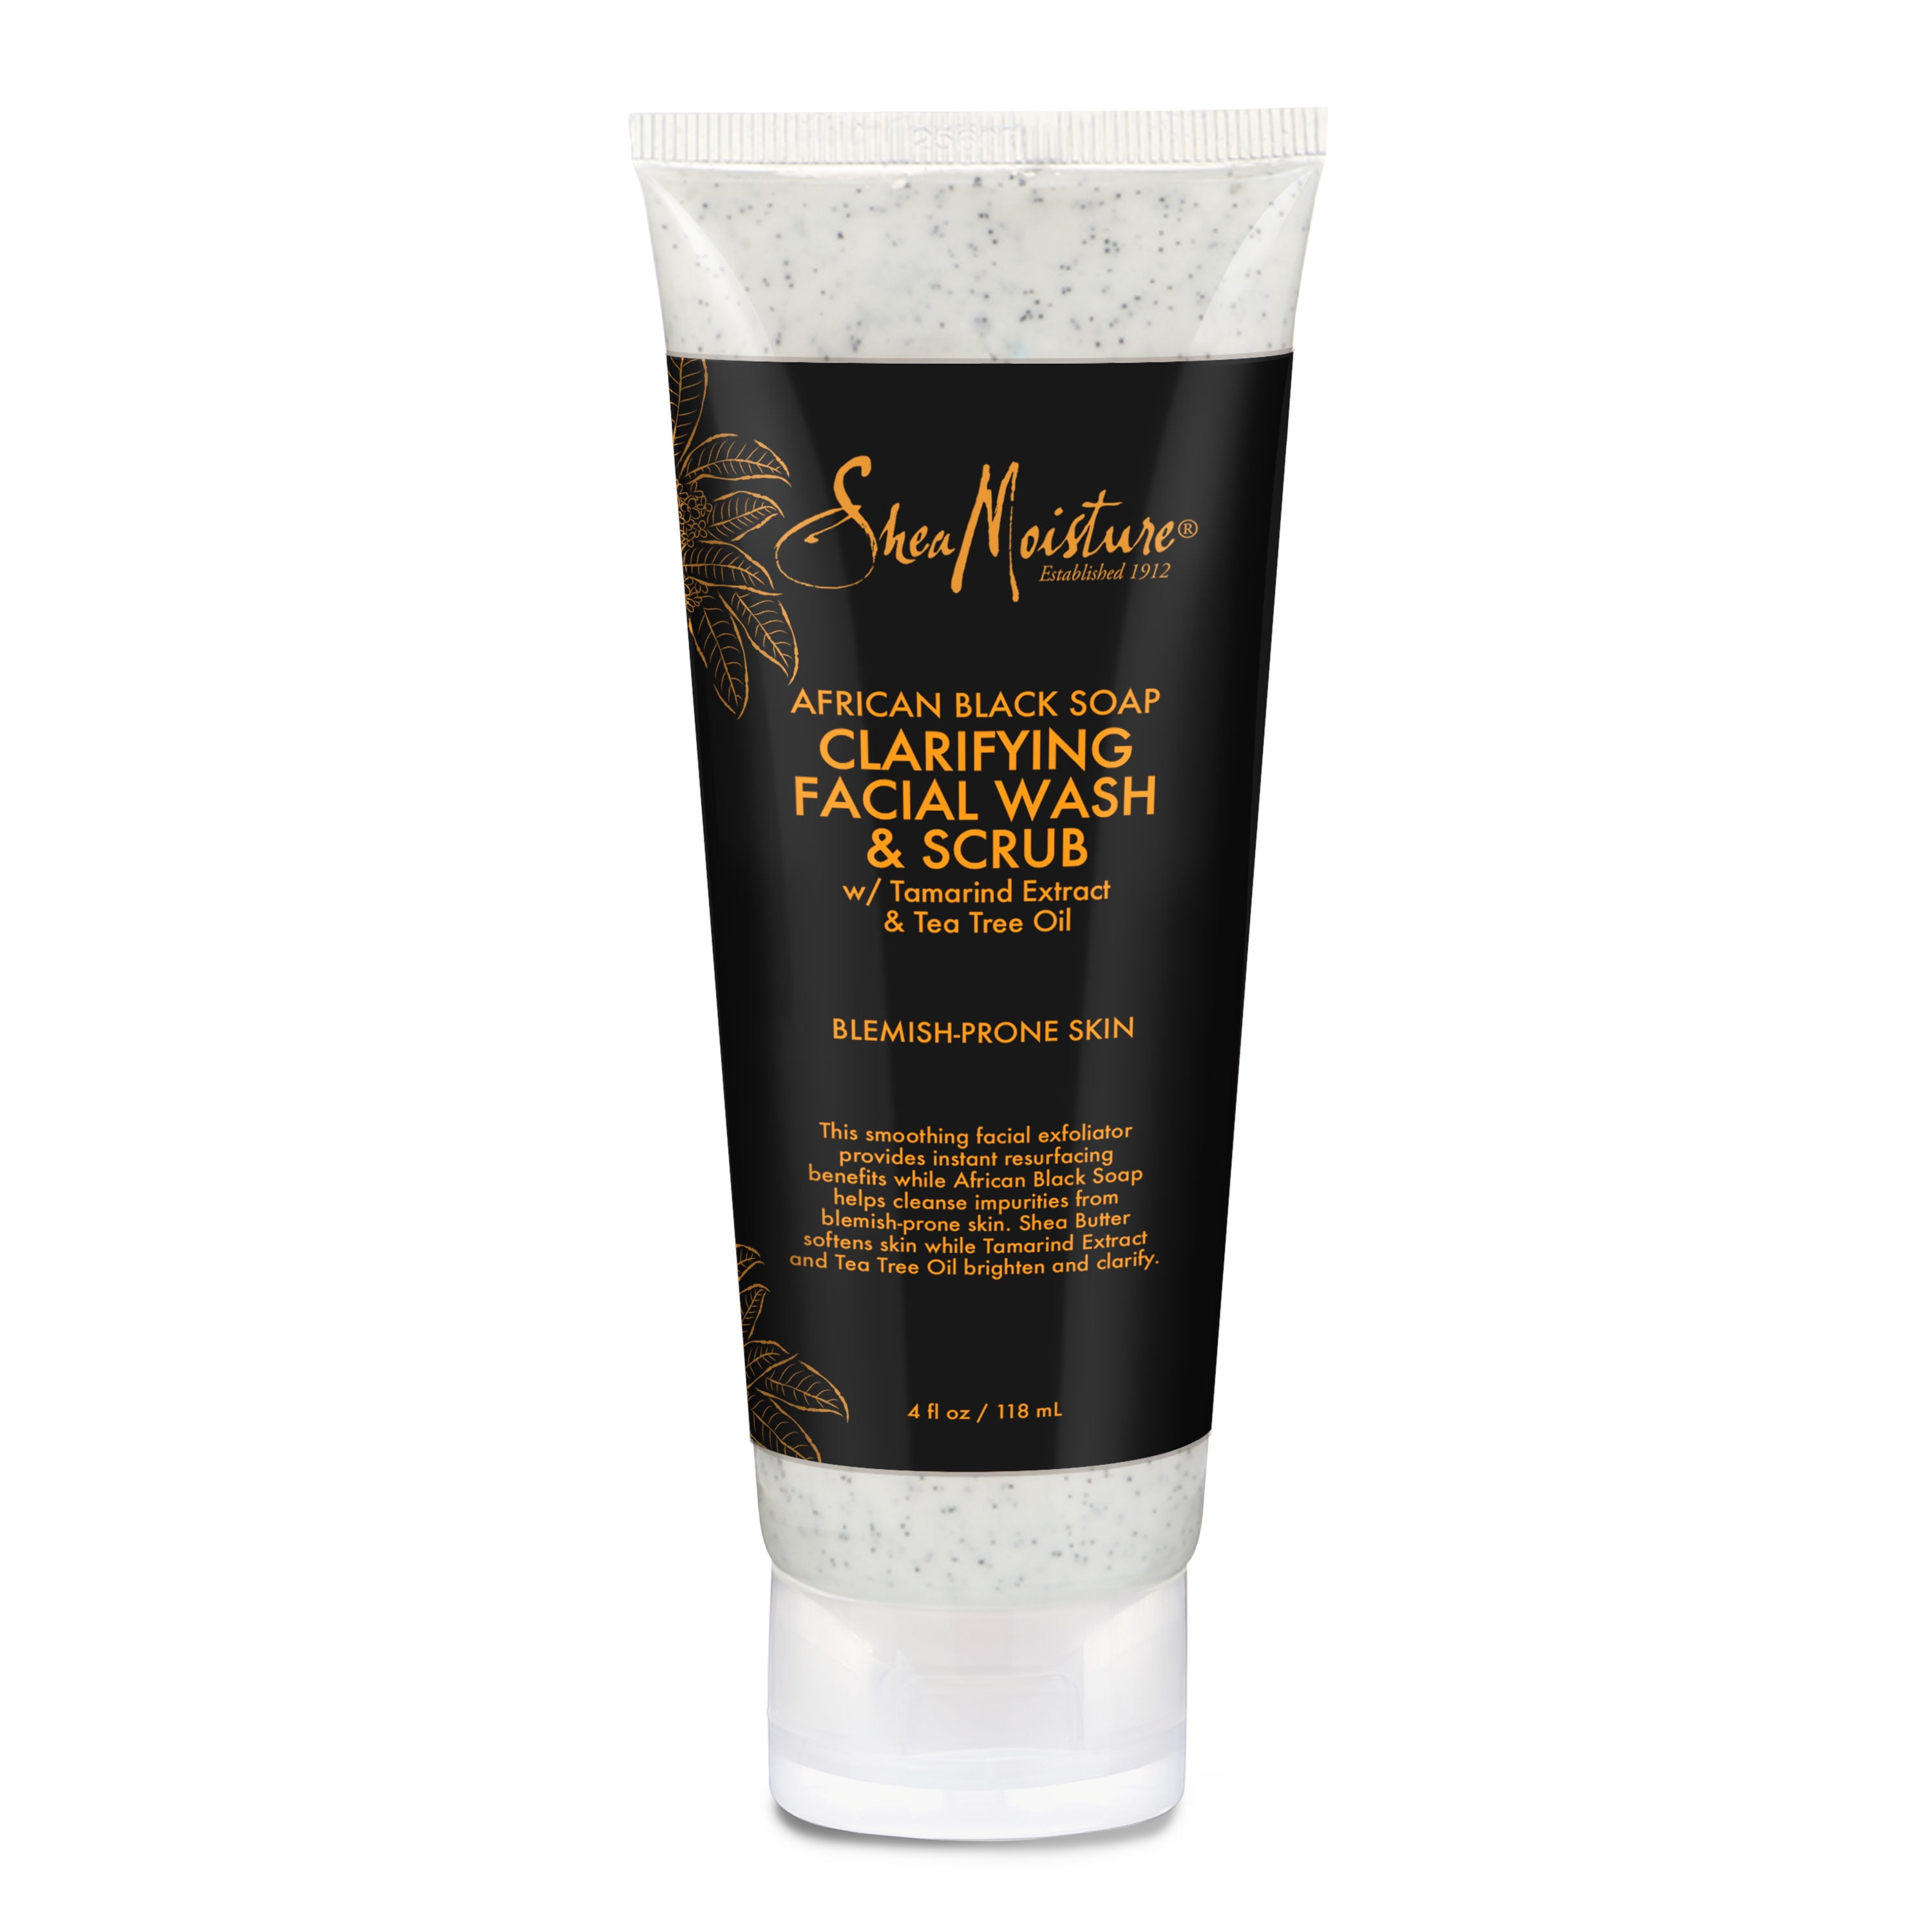 SheaMoisture African Black Soap Problem Facial Wash & Scrub, 4 oz